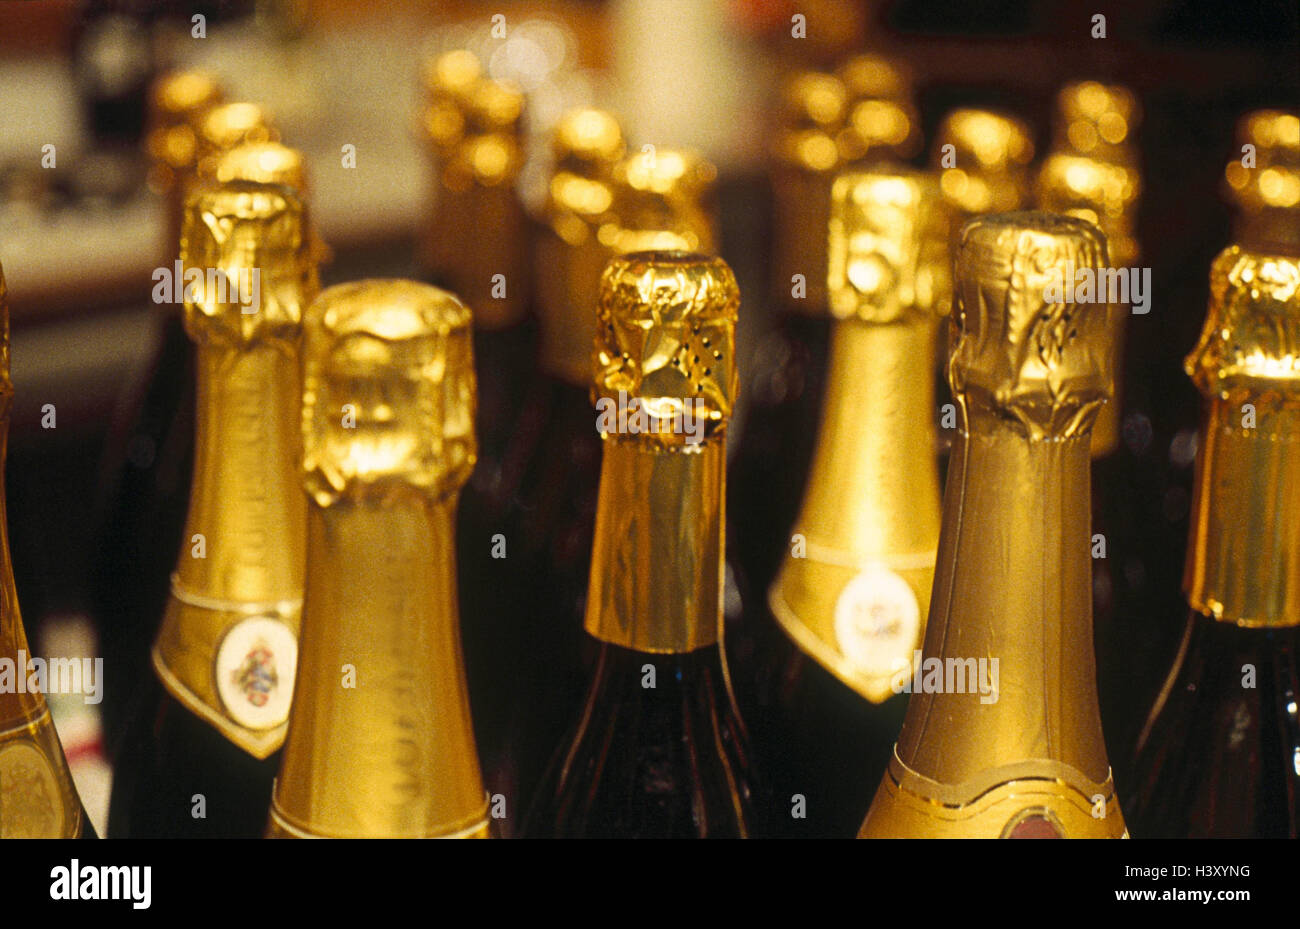 Bottles, champagnes, close up, Still life, product photography, Sparkling Wine, Sparkling Wine Bottles, champagne Bottles, detail, unopened, sealed, corks, drinks, alcoholic, alcohol, bottlenecks, close up Stock Photo